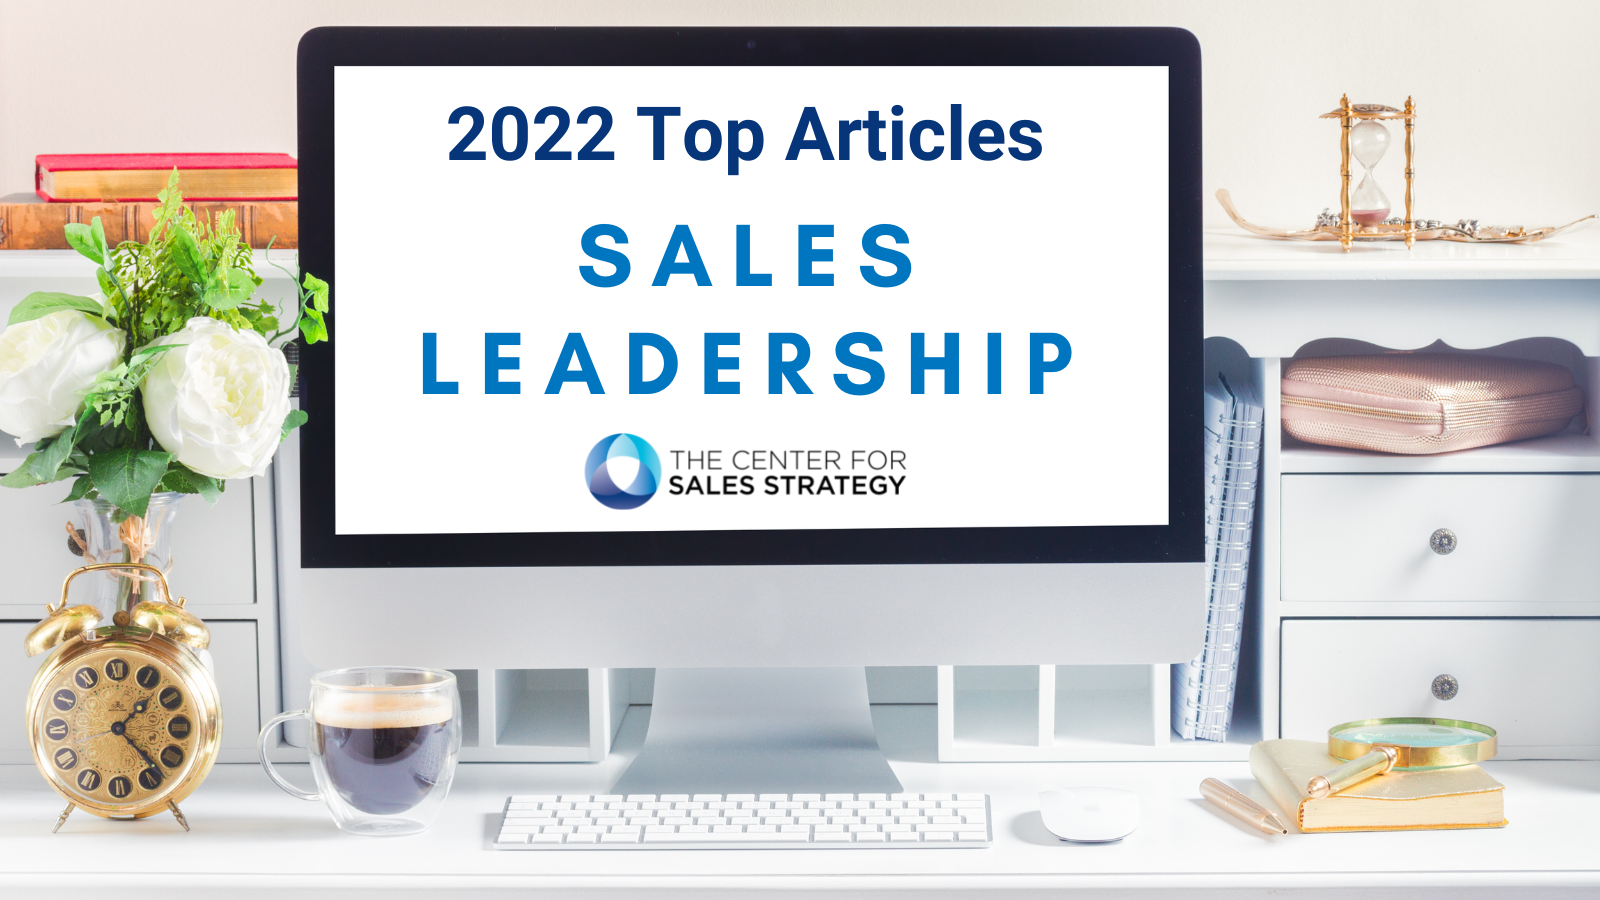 Top 2022 Articles Sales Leadership